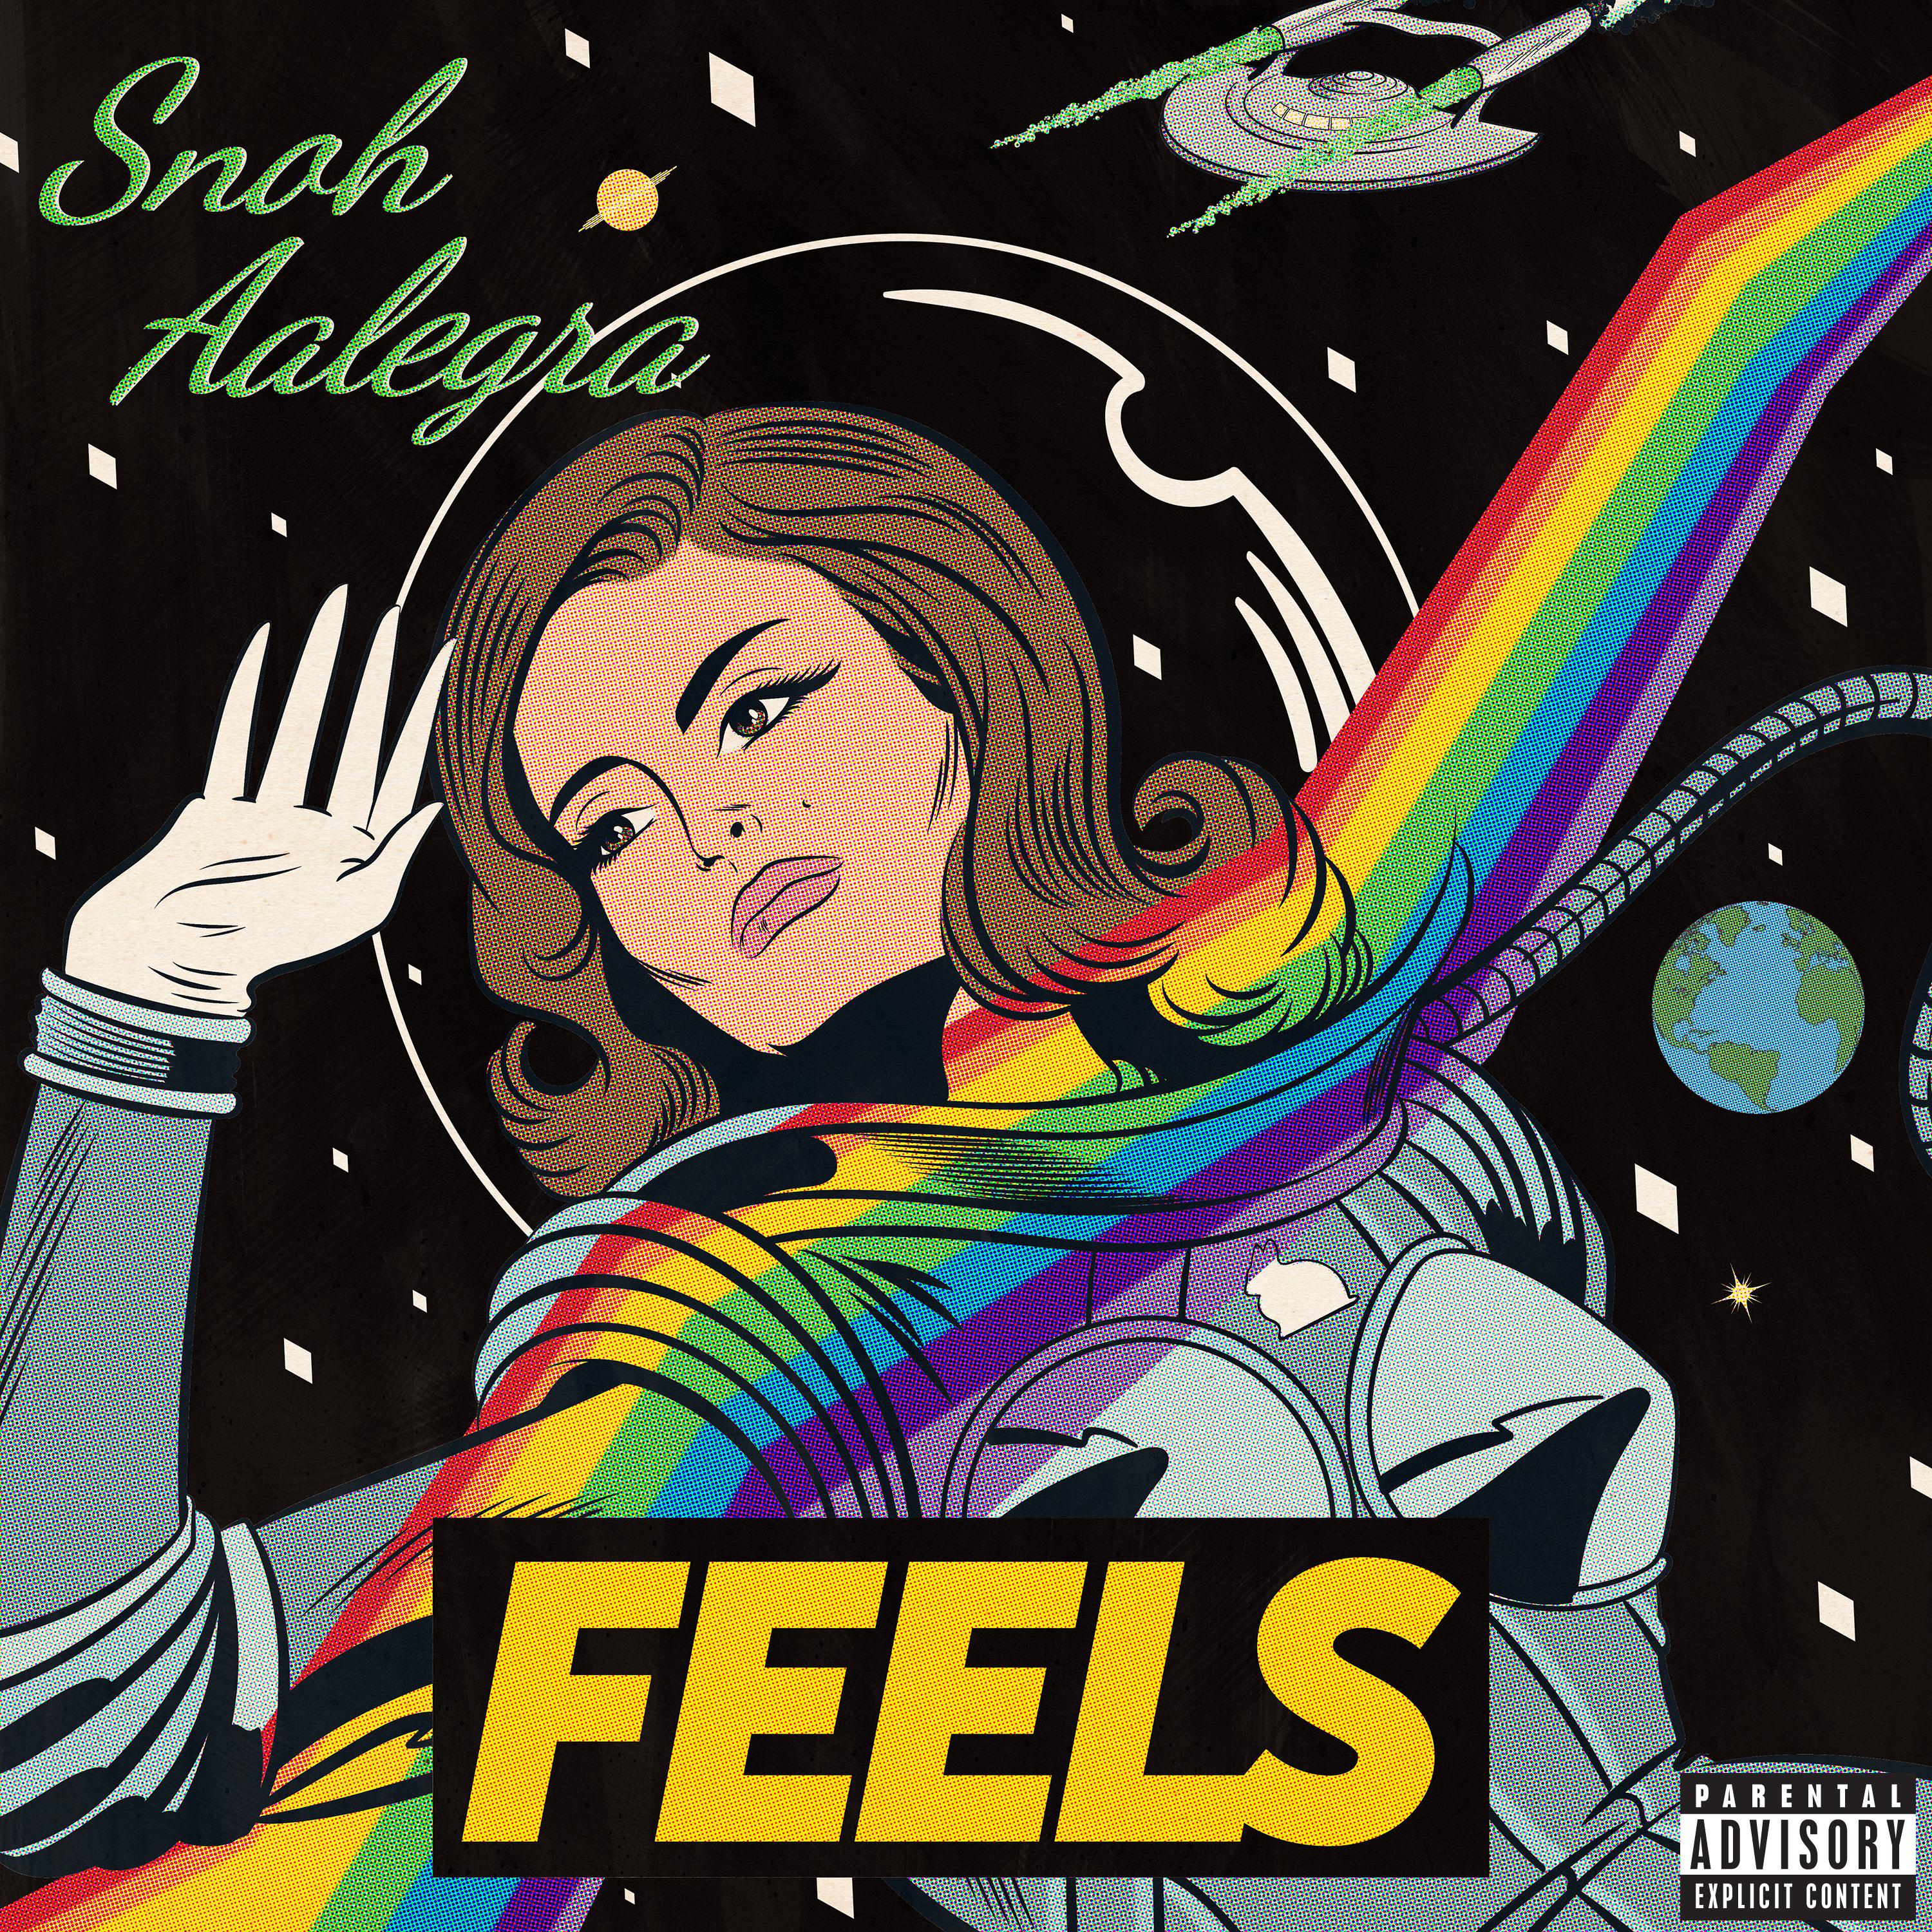 Fool for You歌词 歌手Snoh Aalegra-专辑Feels-单曲《Fool for You》LRC歌词下载